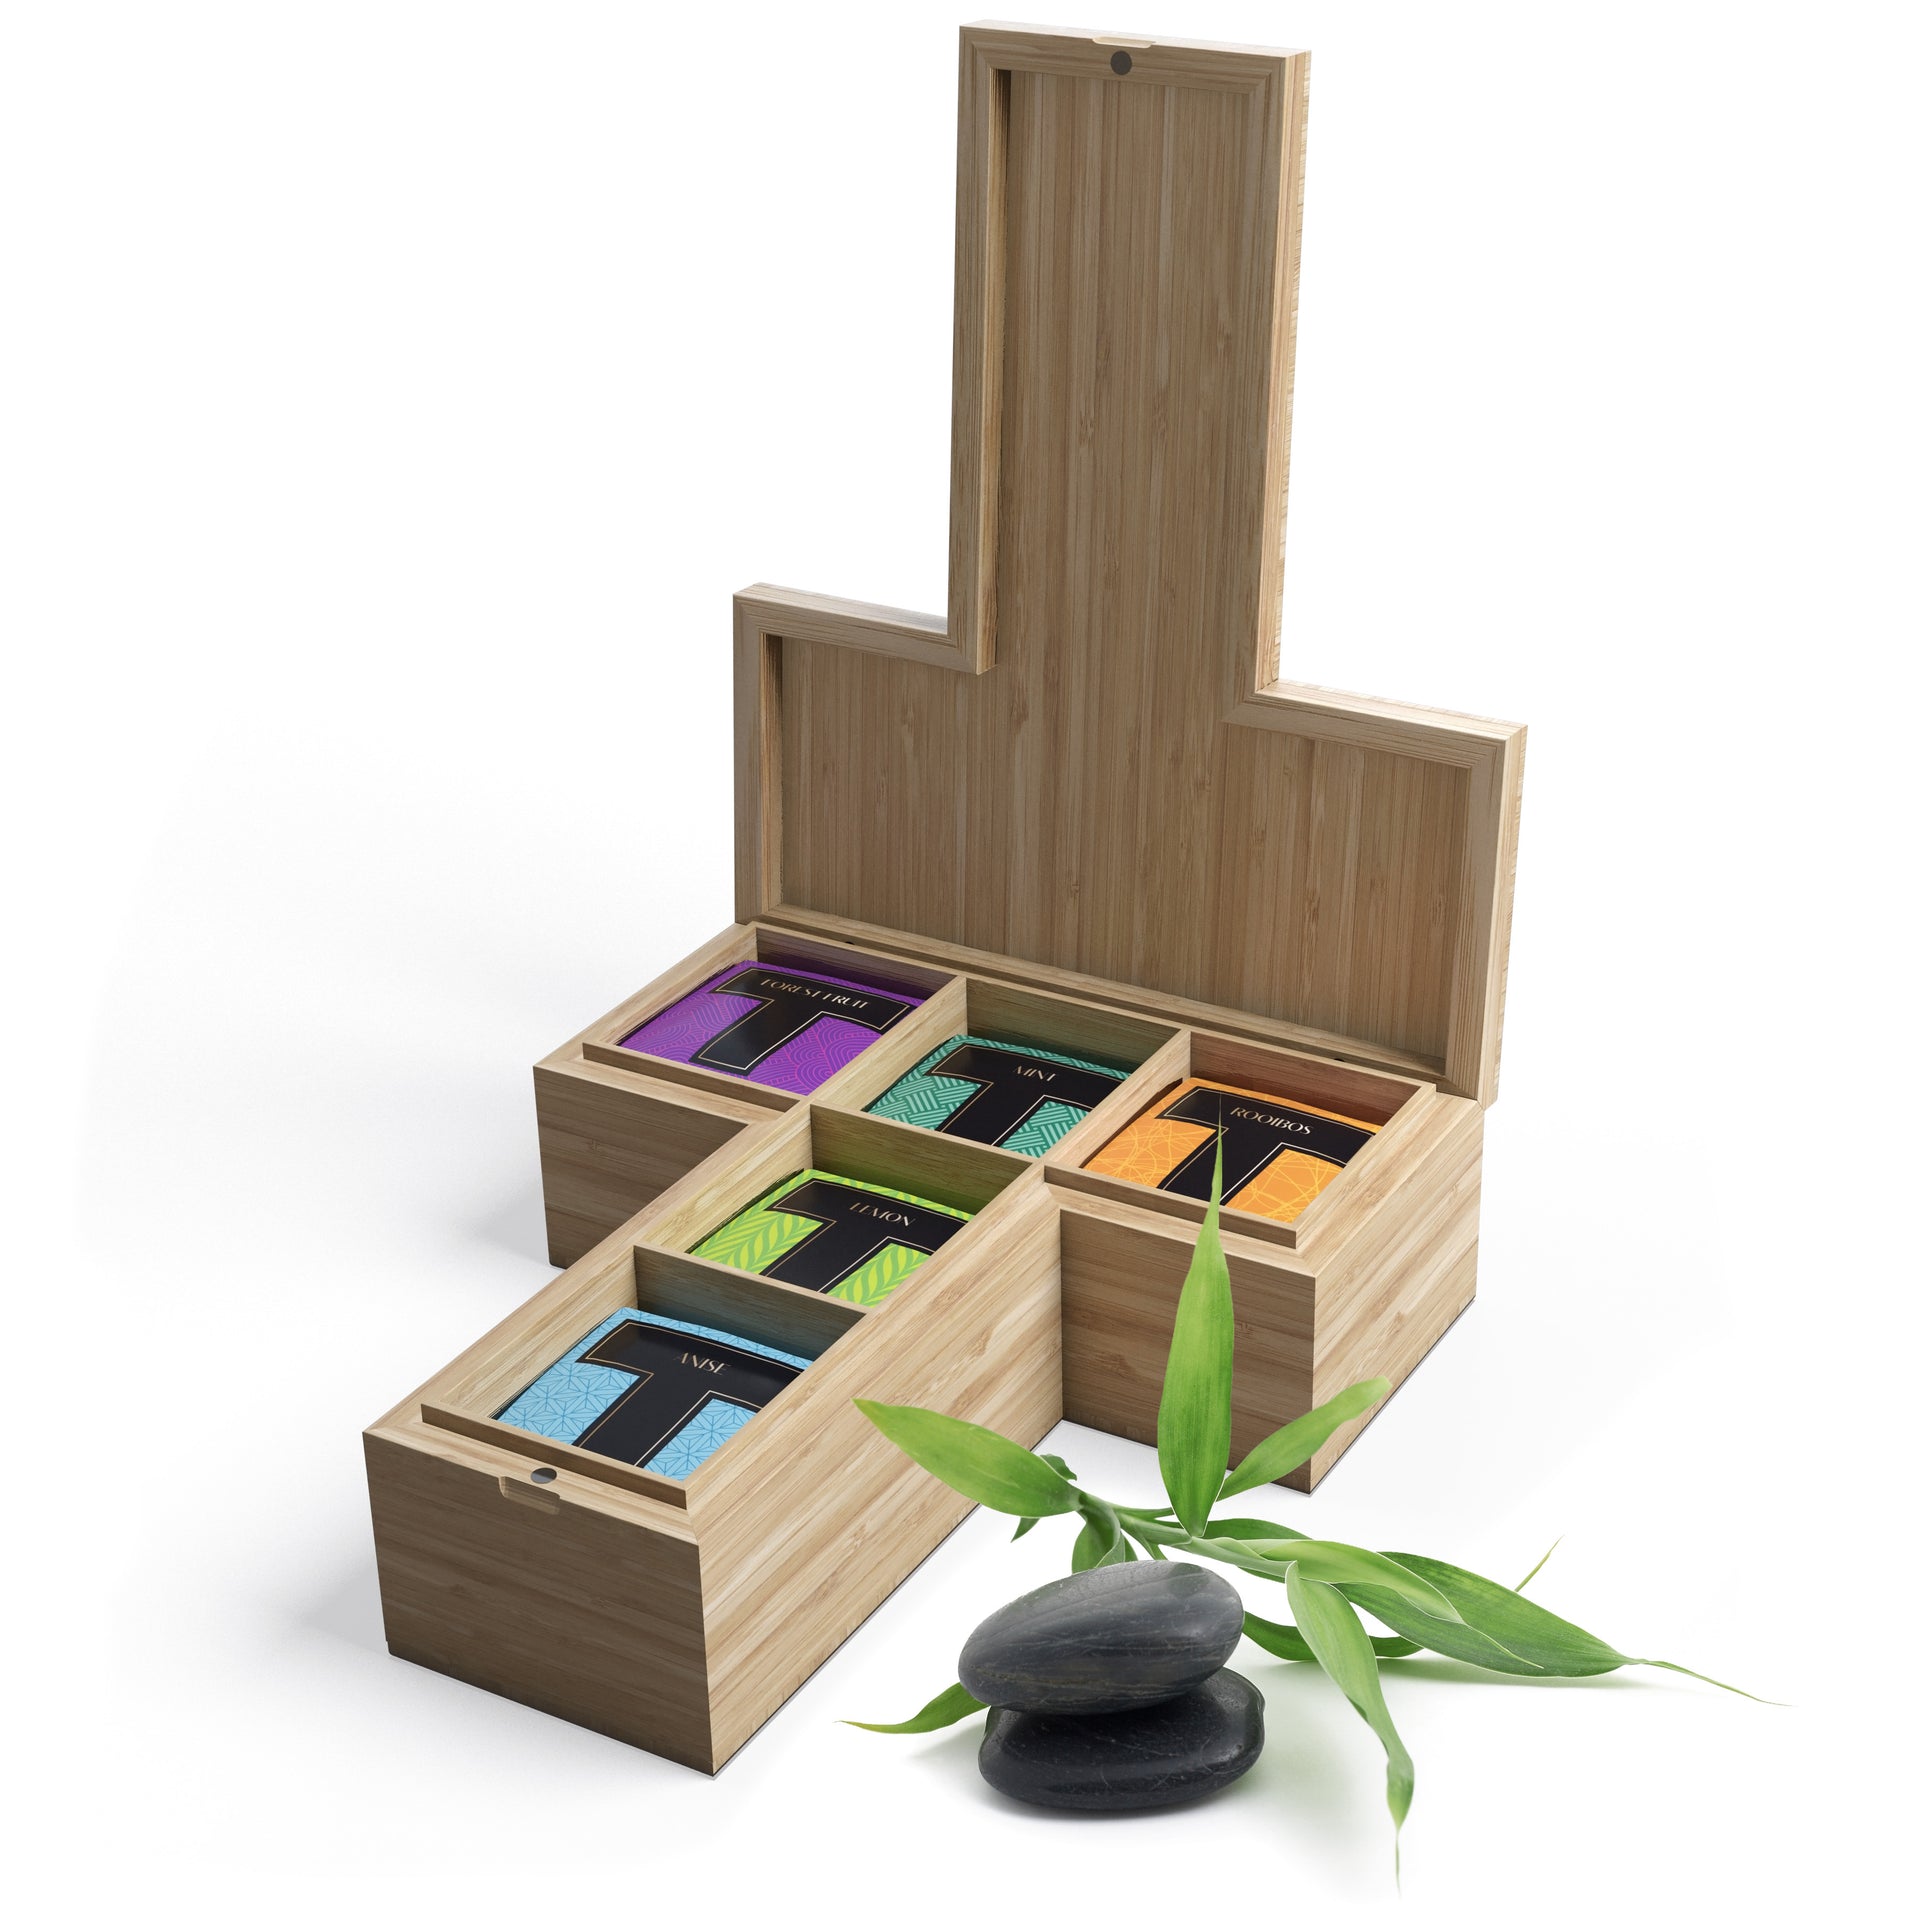 mboo The-t-box-t-doos-durable-dutch-premium-storage-solution-design-sustainable-enviroment-bamboo-te-box - The T-Box tea box design bamboo